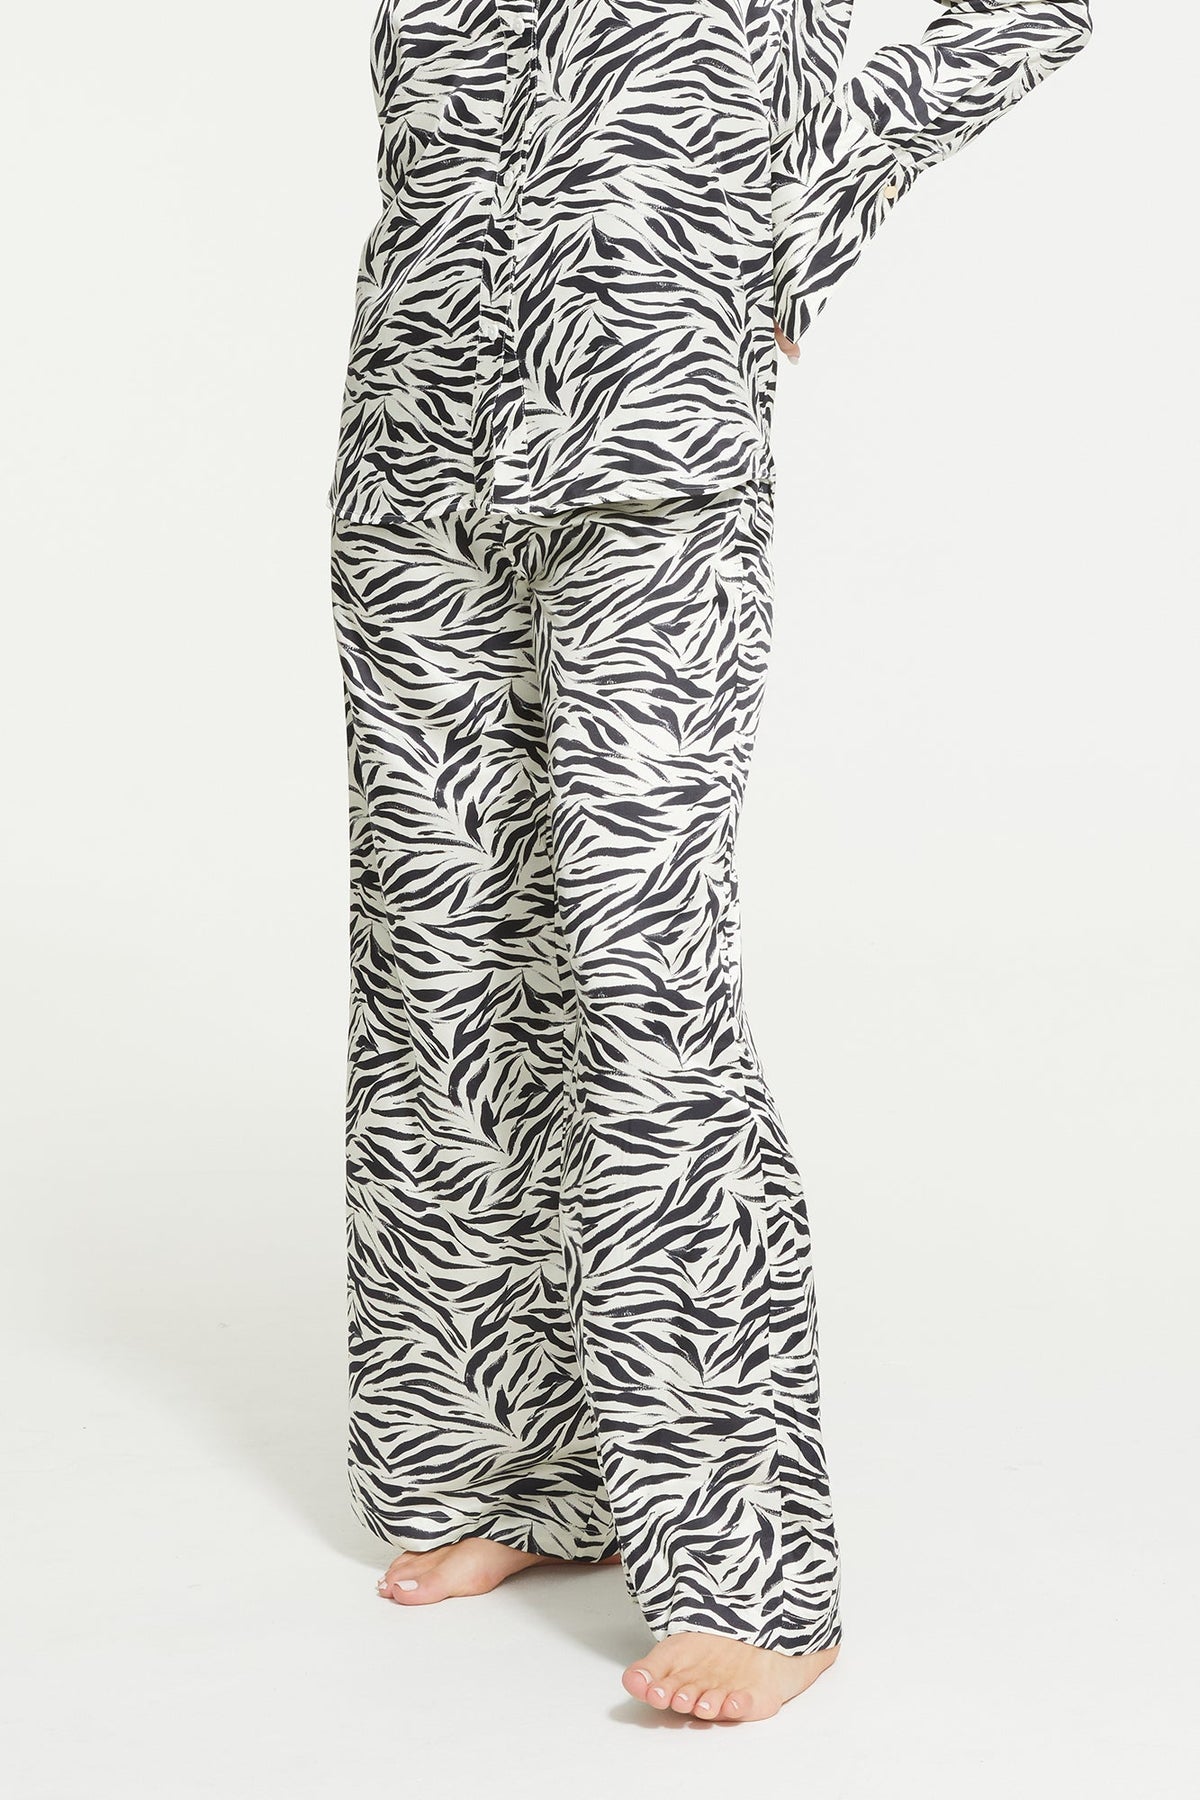 The Zafina Long Pants in Brush Zebra Print by Ginia